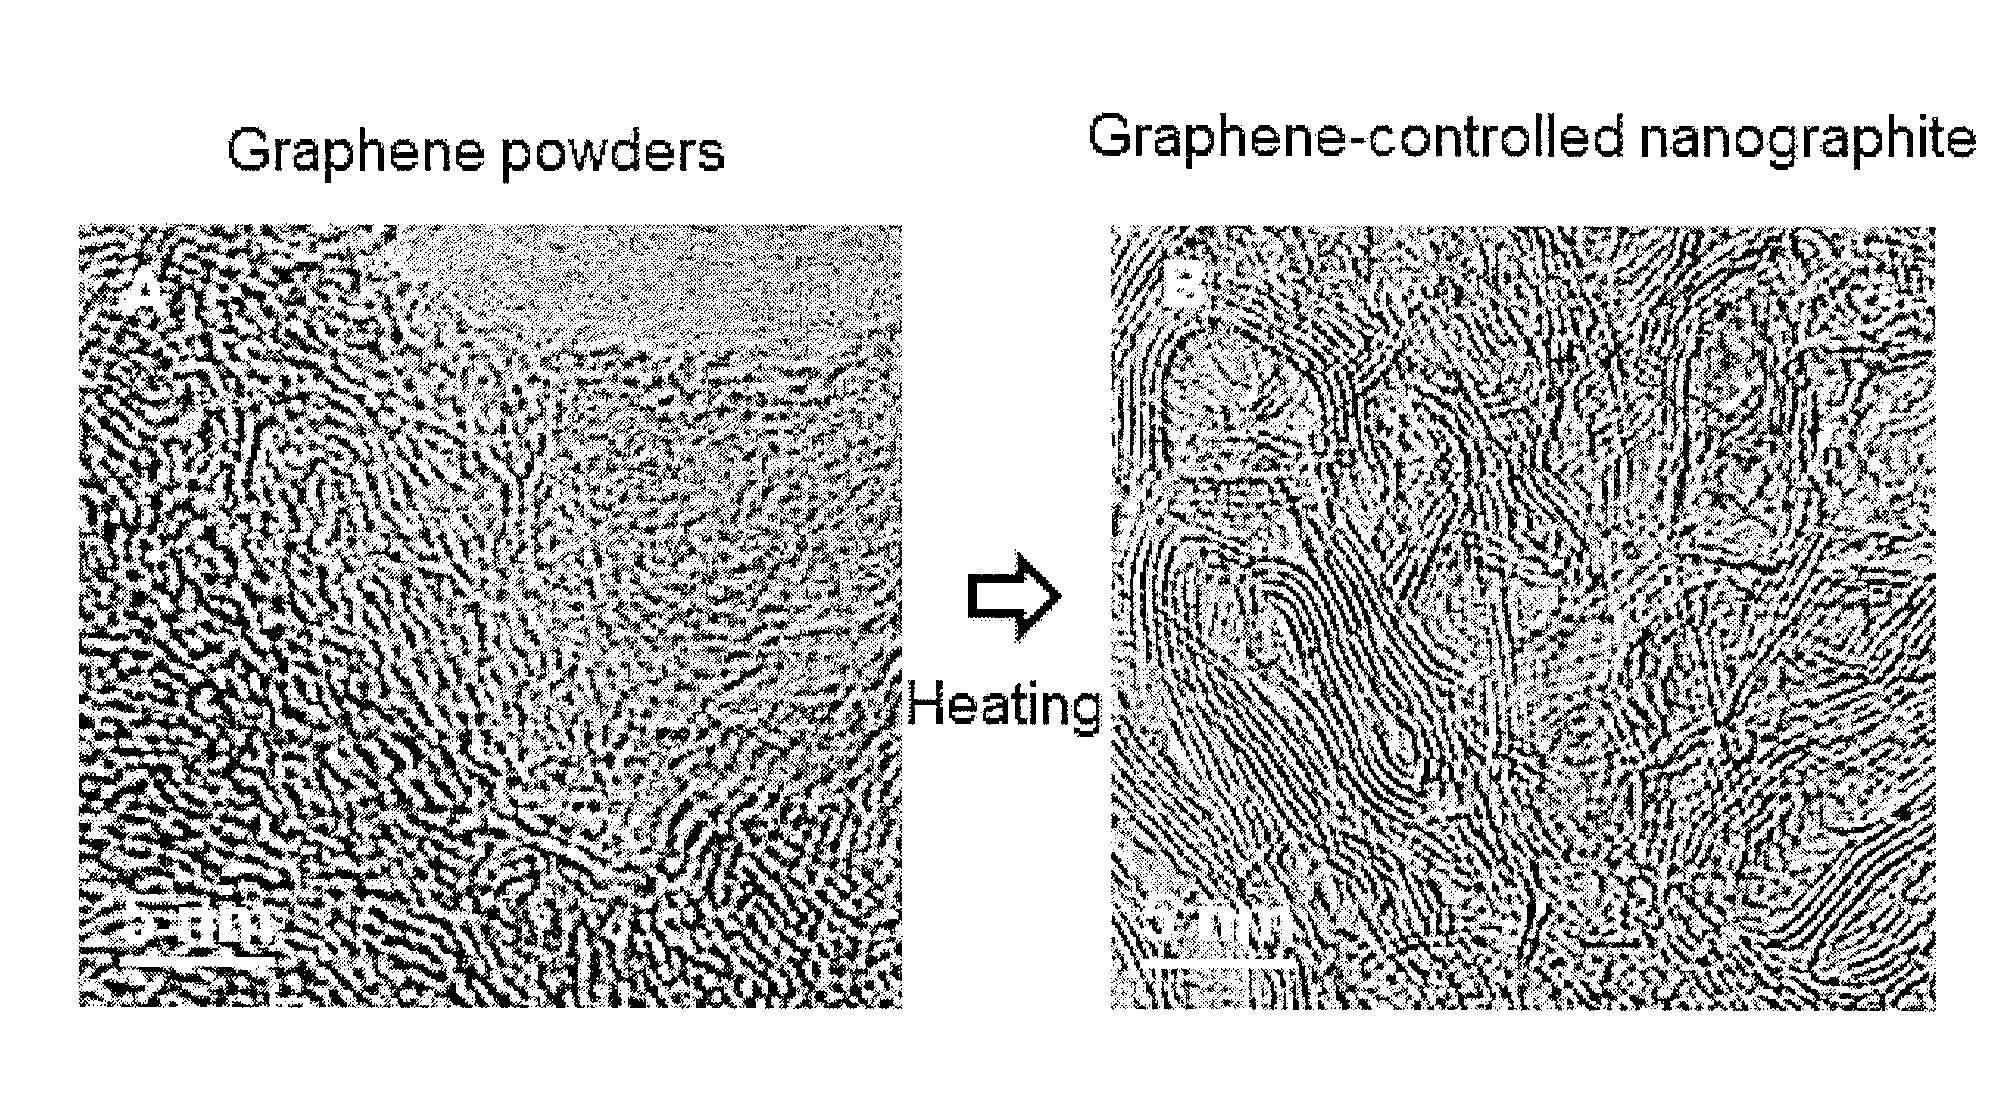 Fabrication method of graphene-controlled nano-graphite